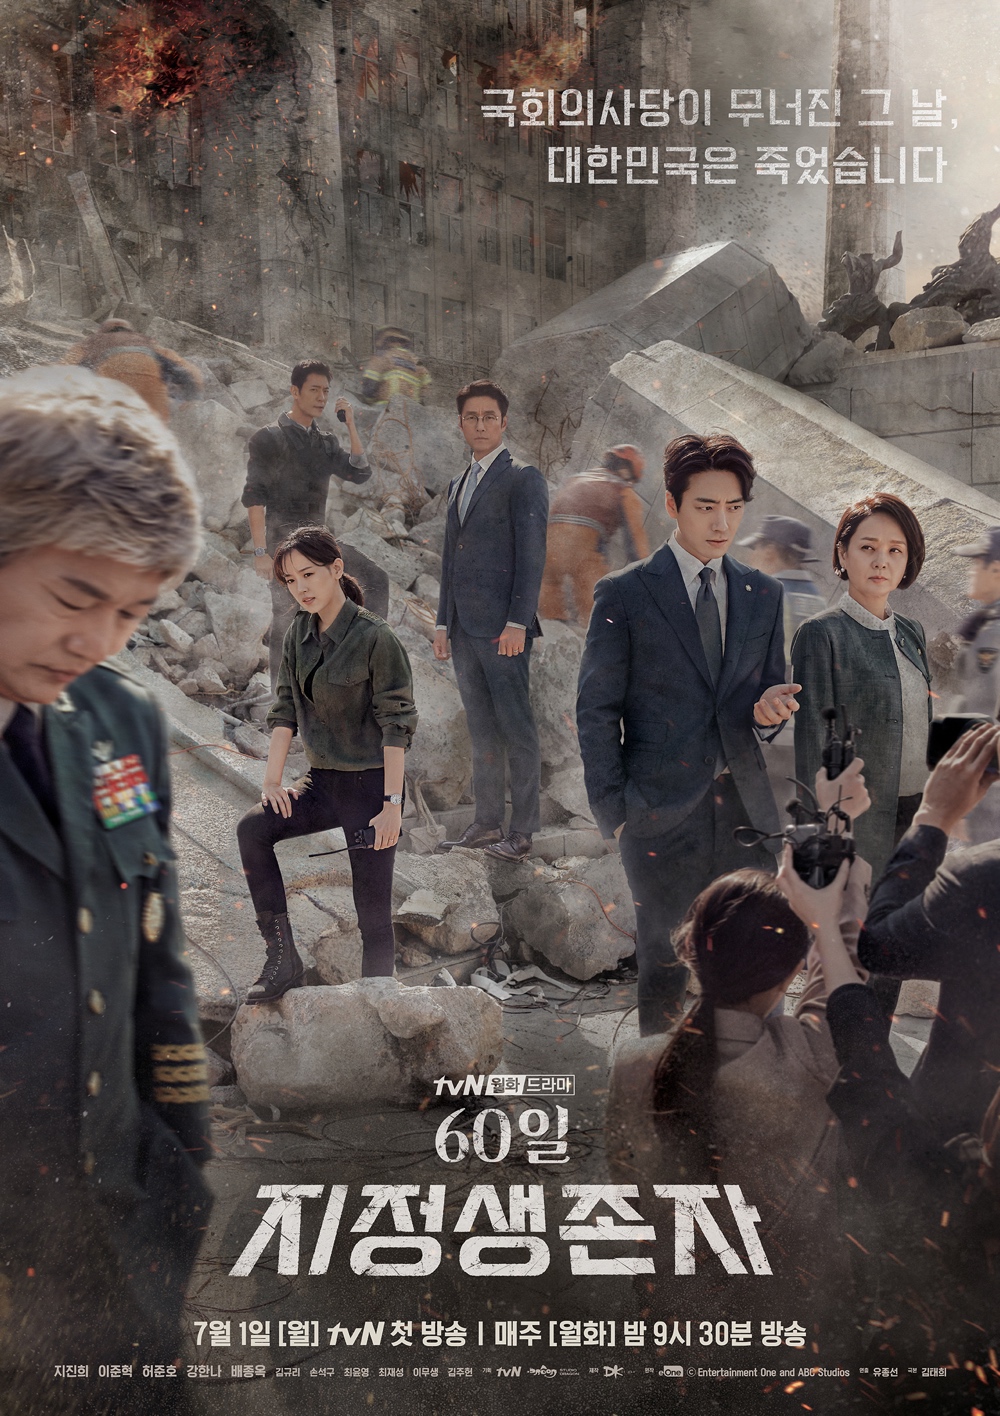 Ep.1 trailer for tvN drama series “Designated Survivor 60 Days